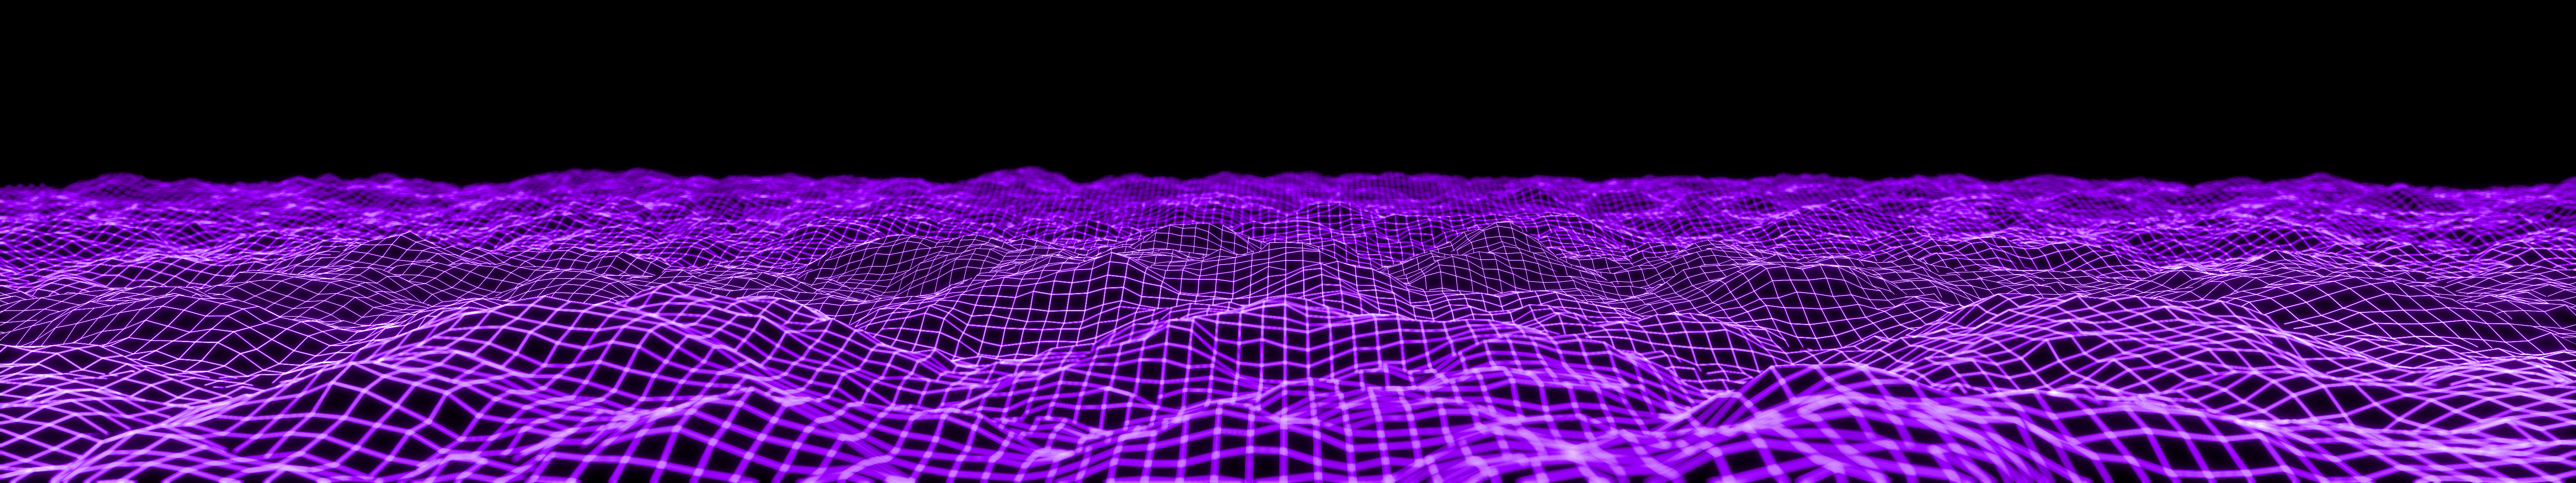 Dual Monitor Purple Wallpapers